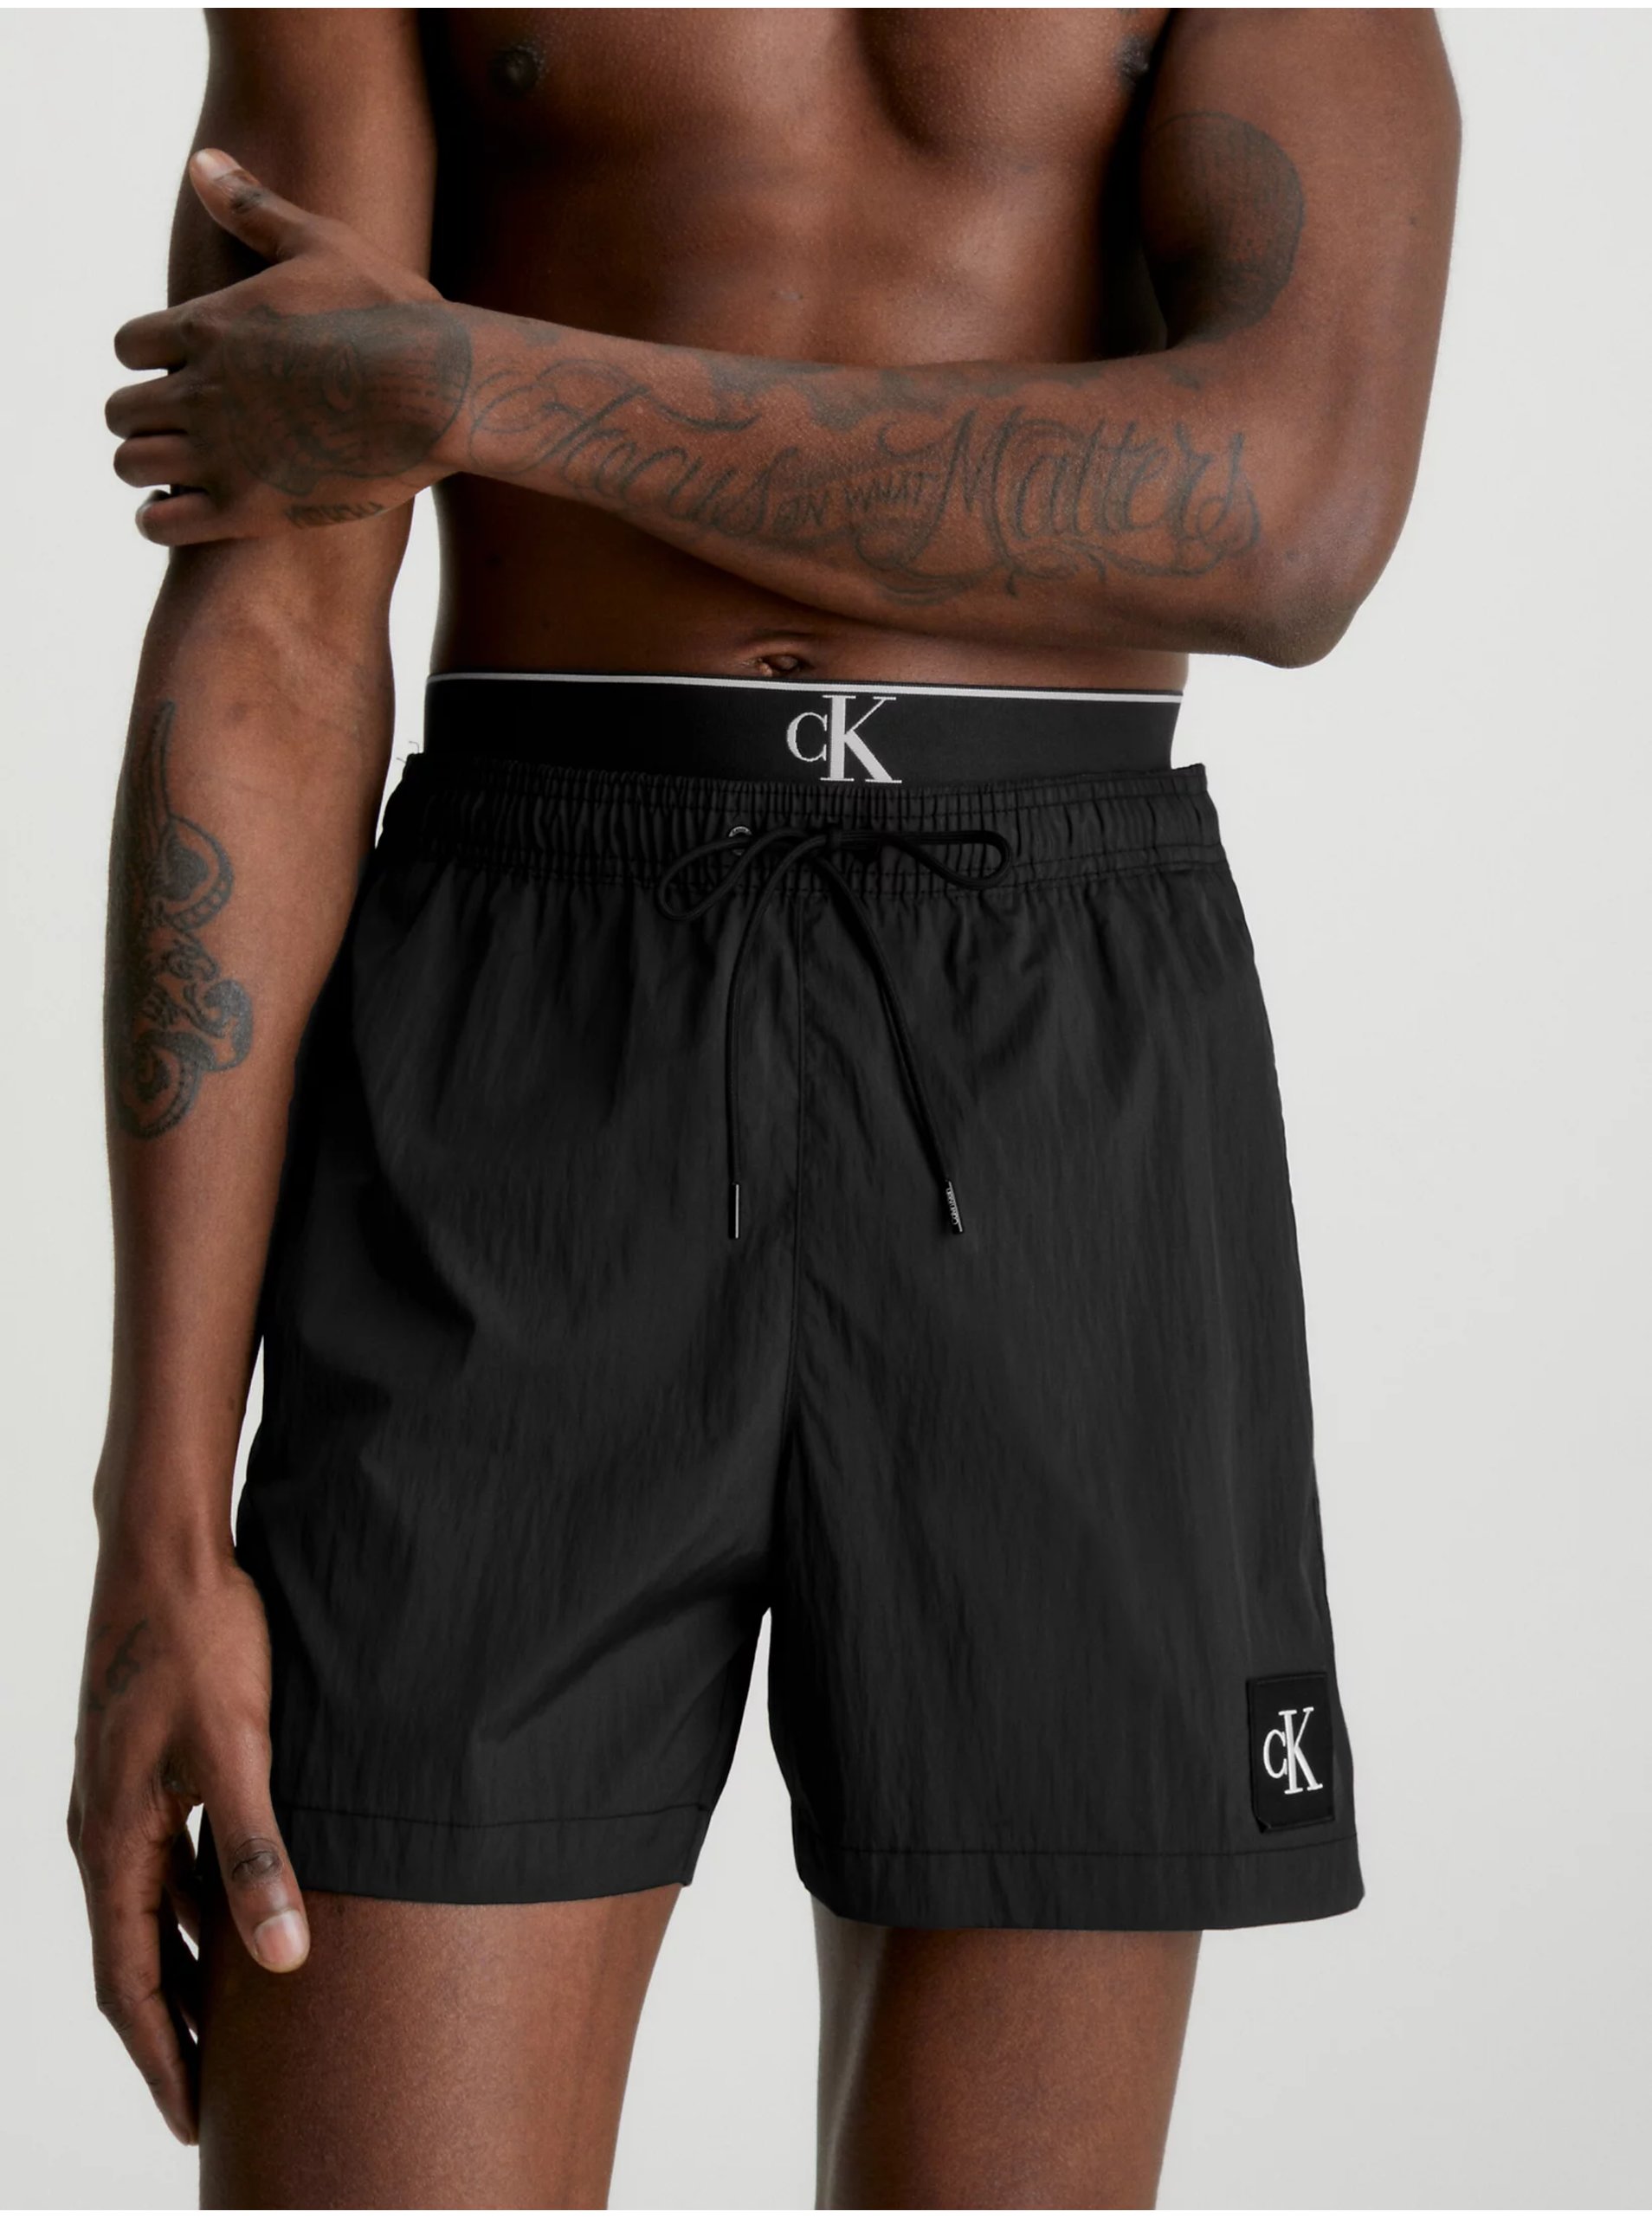 Black Men's Swimsuit Calvin Klein Underwear - Men's